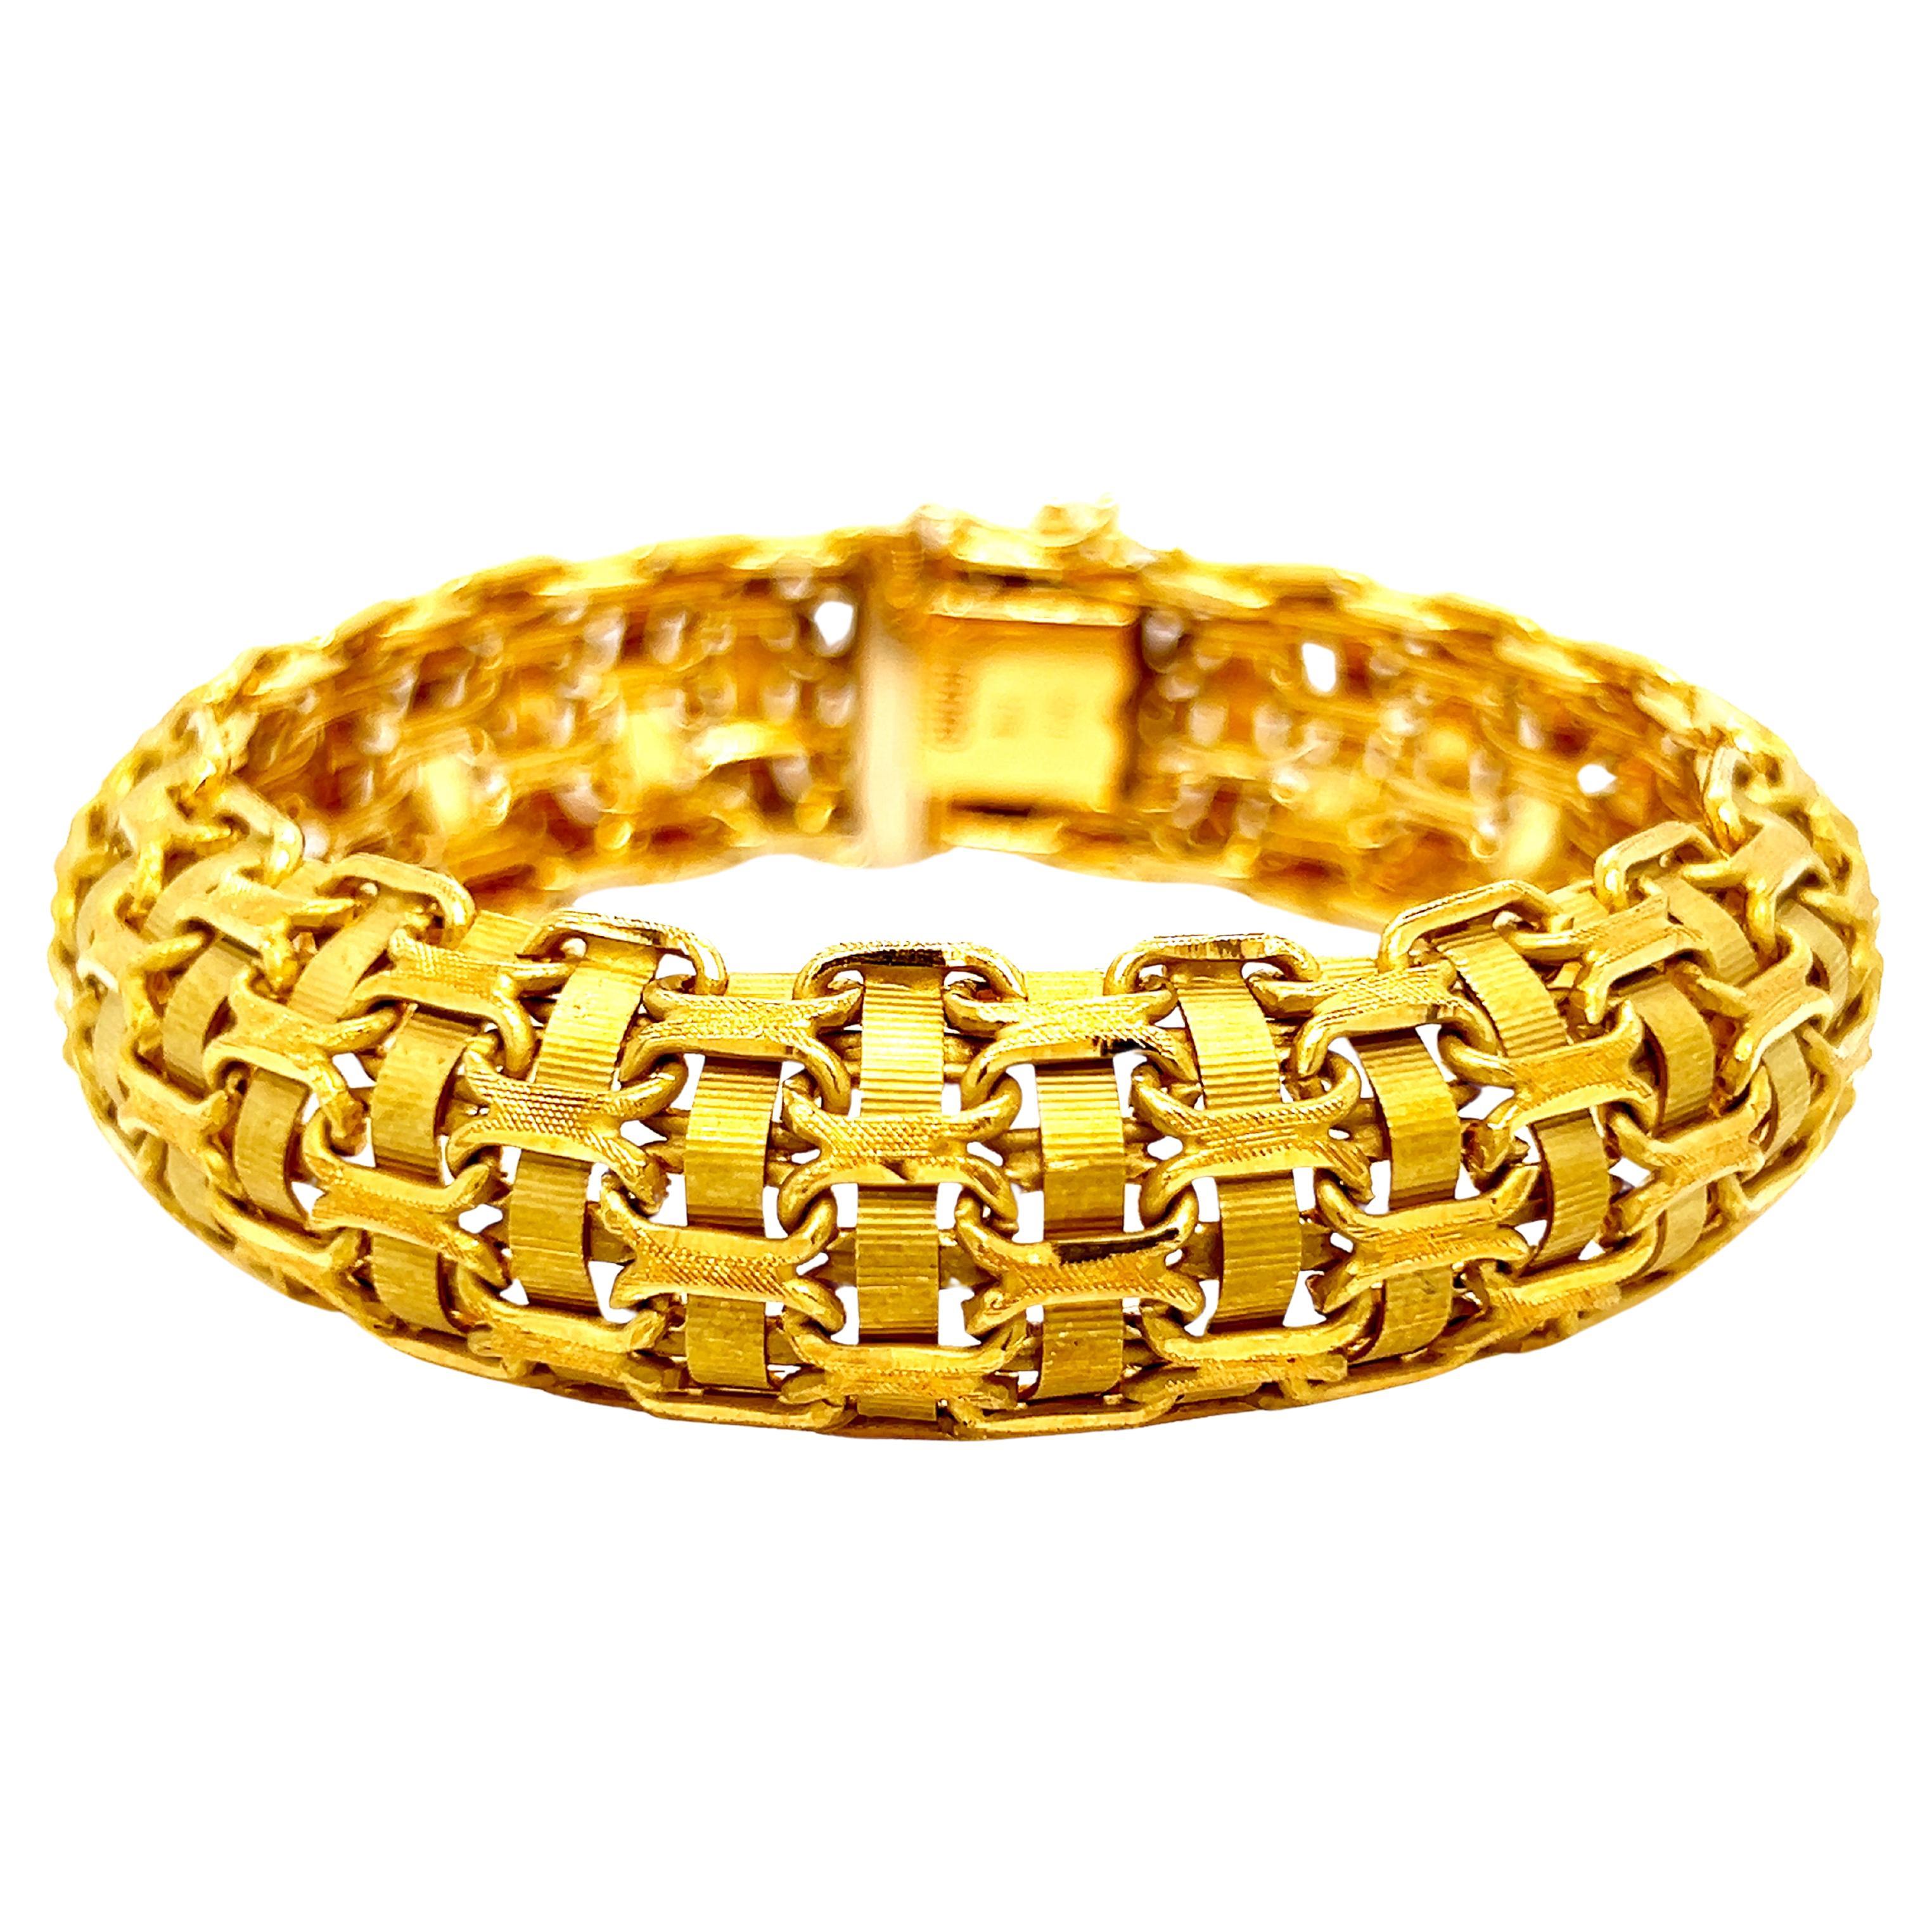 Original 1973 Gucci New York 18Kt Yellow Gold Bangle Bracelet